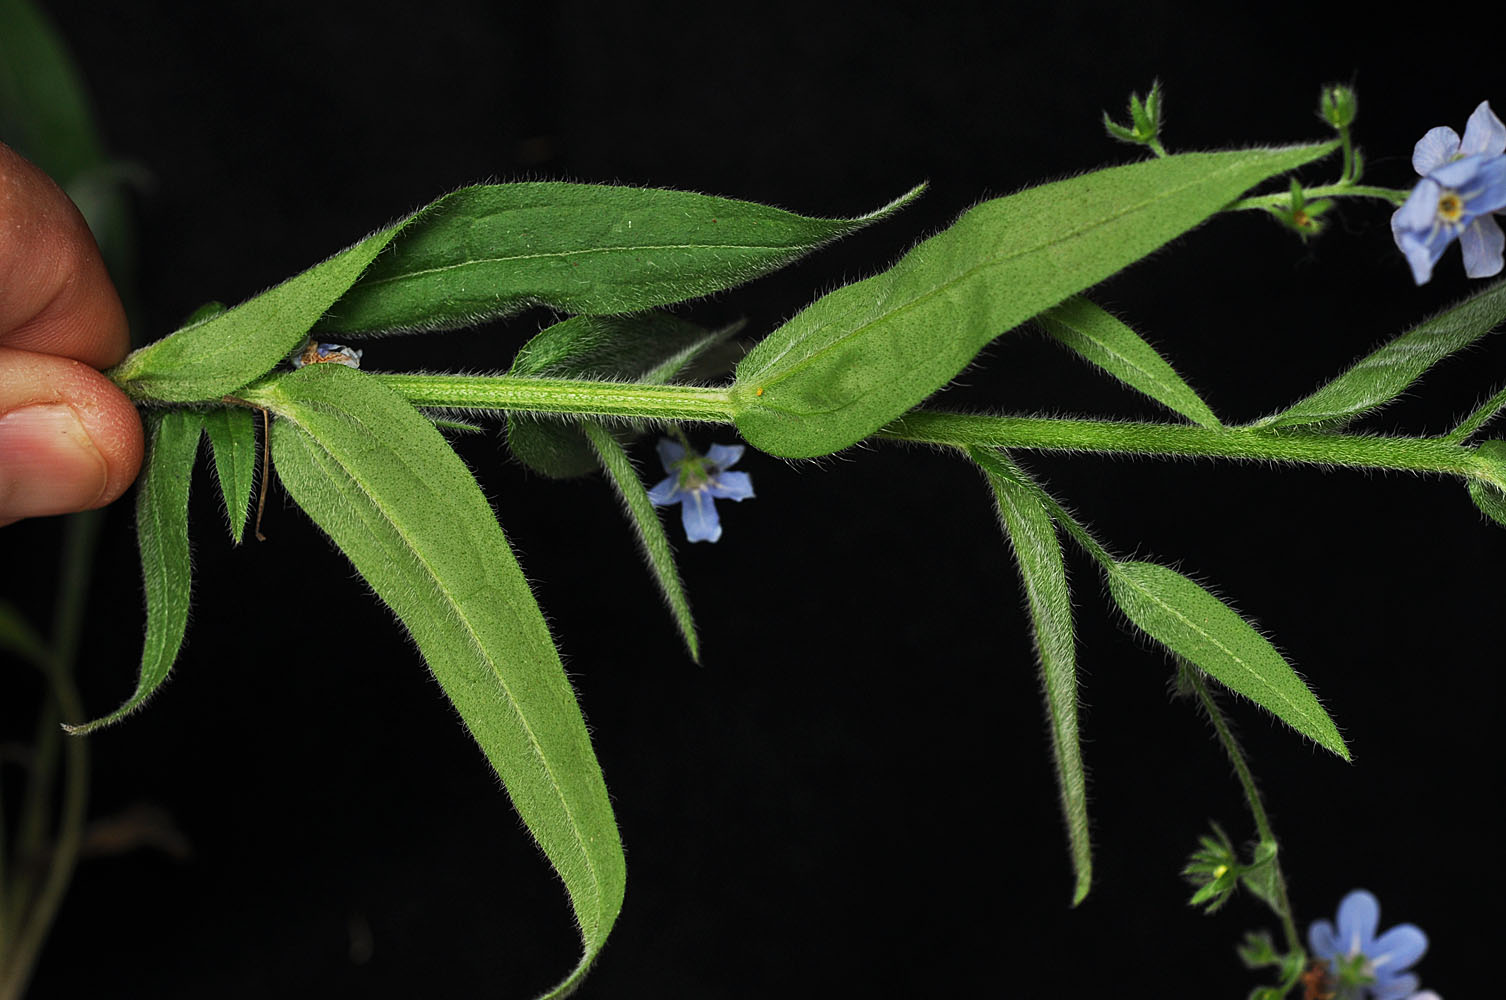 Flora of Eastern Washington Image: Hackelia diffusa diffusa